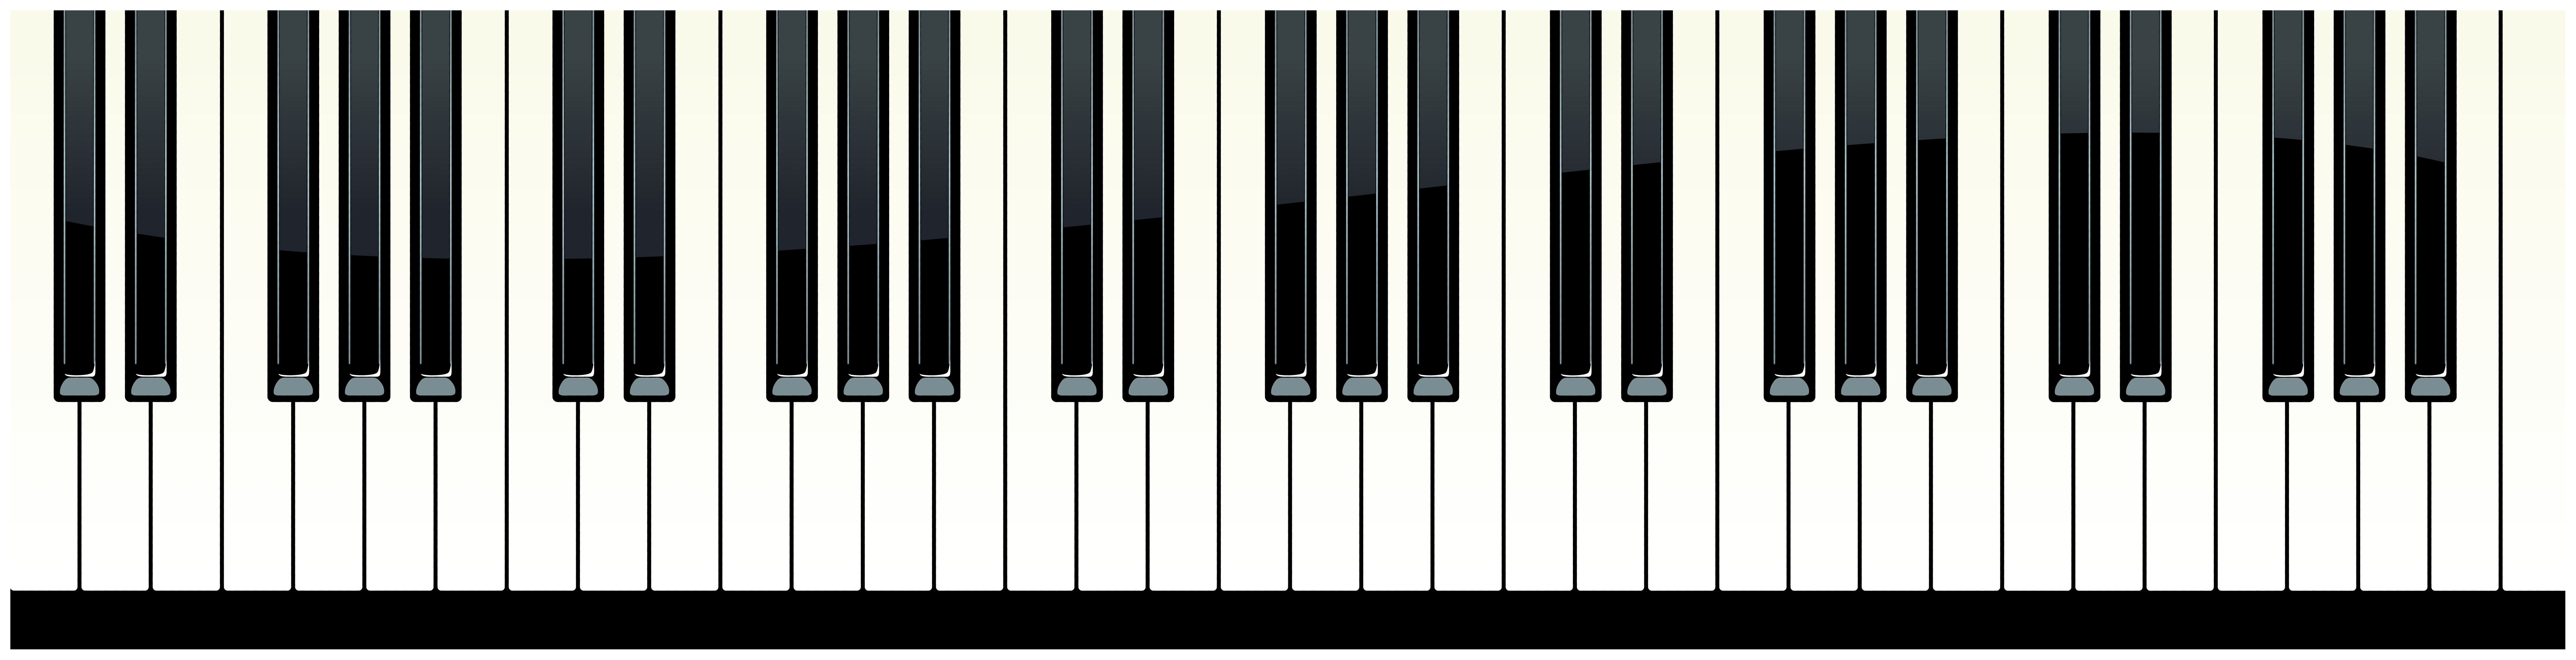 Piano Keys PNG Clip Art Image